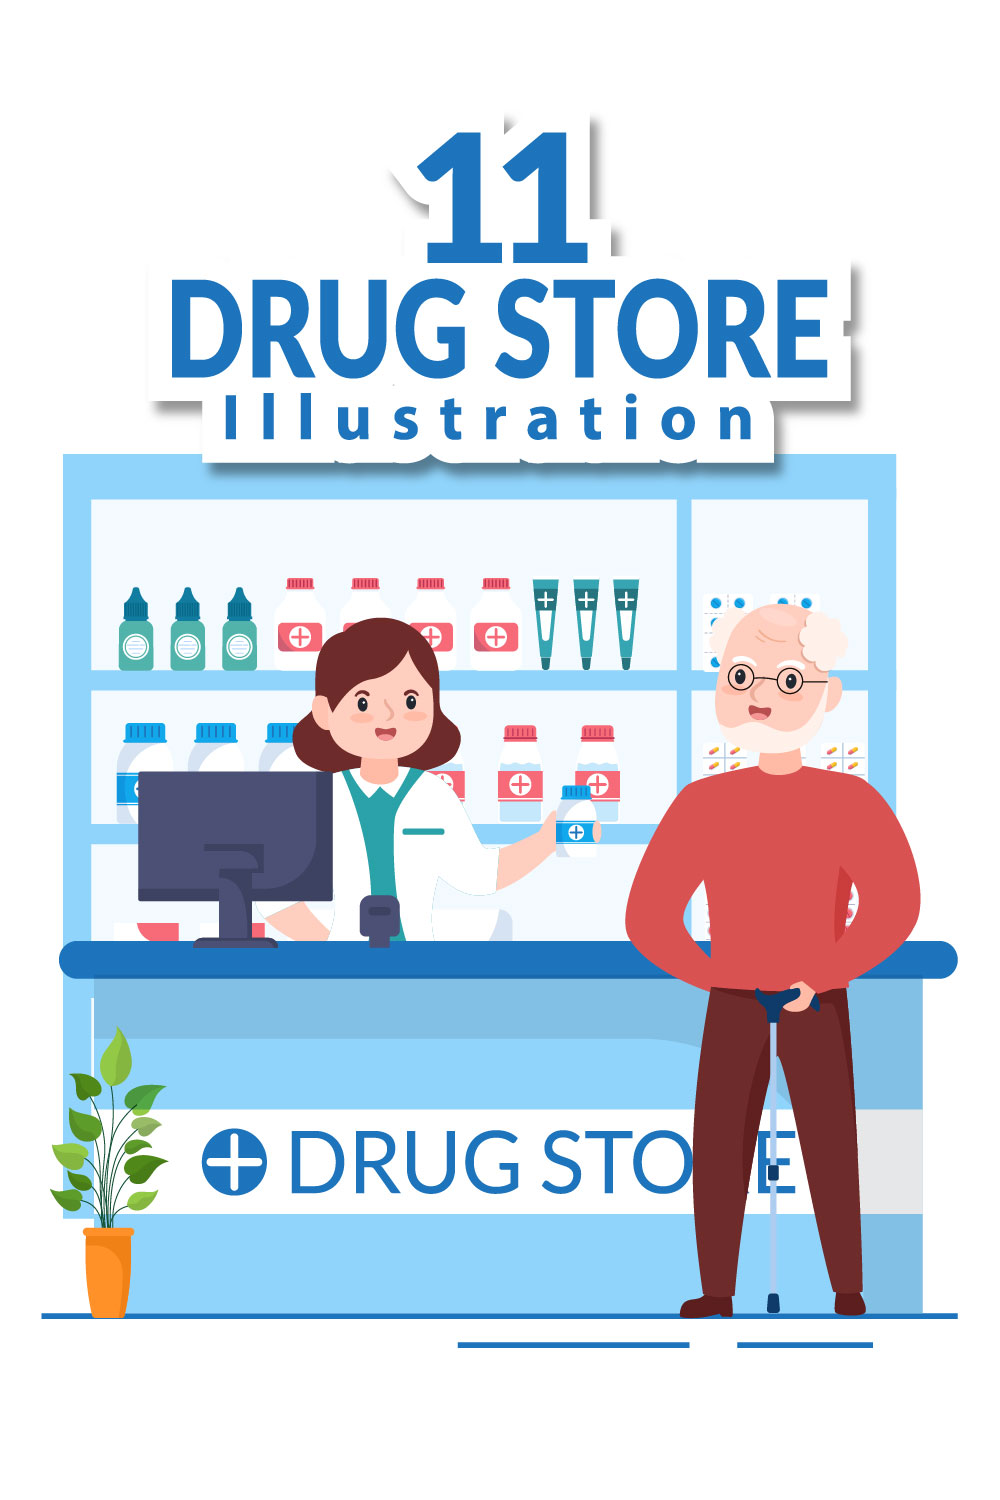 Drug Store Illustration Pinterest image.